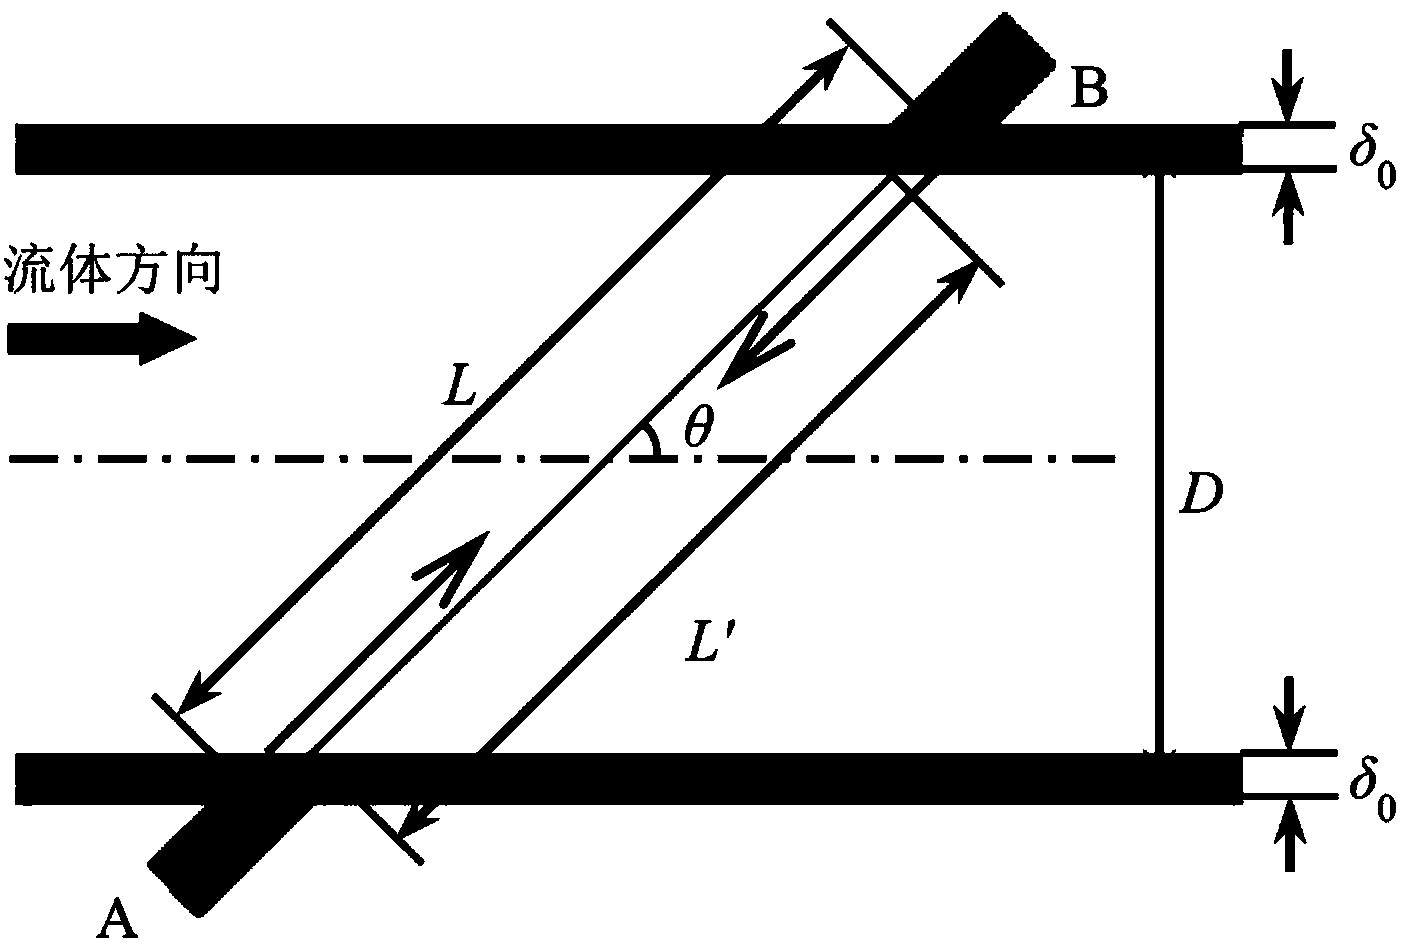 Moisture flow measuring method based on straight through type gas ultrasonic flowmeter